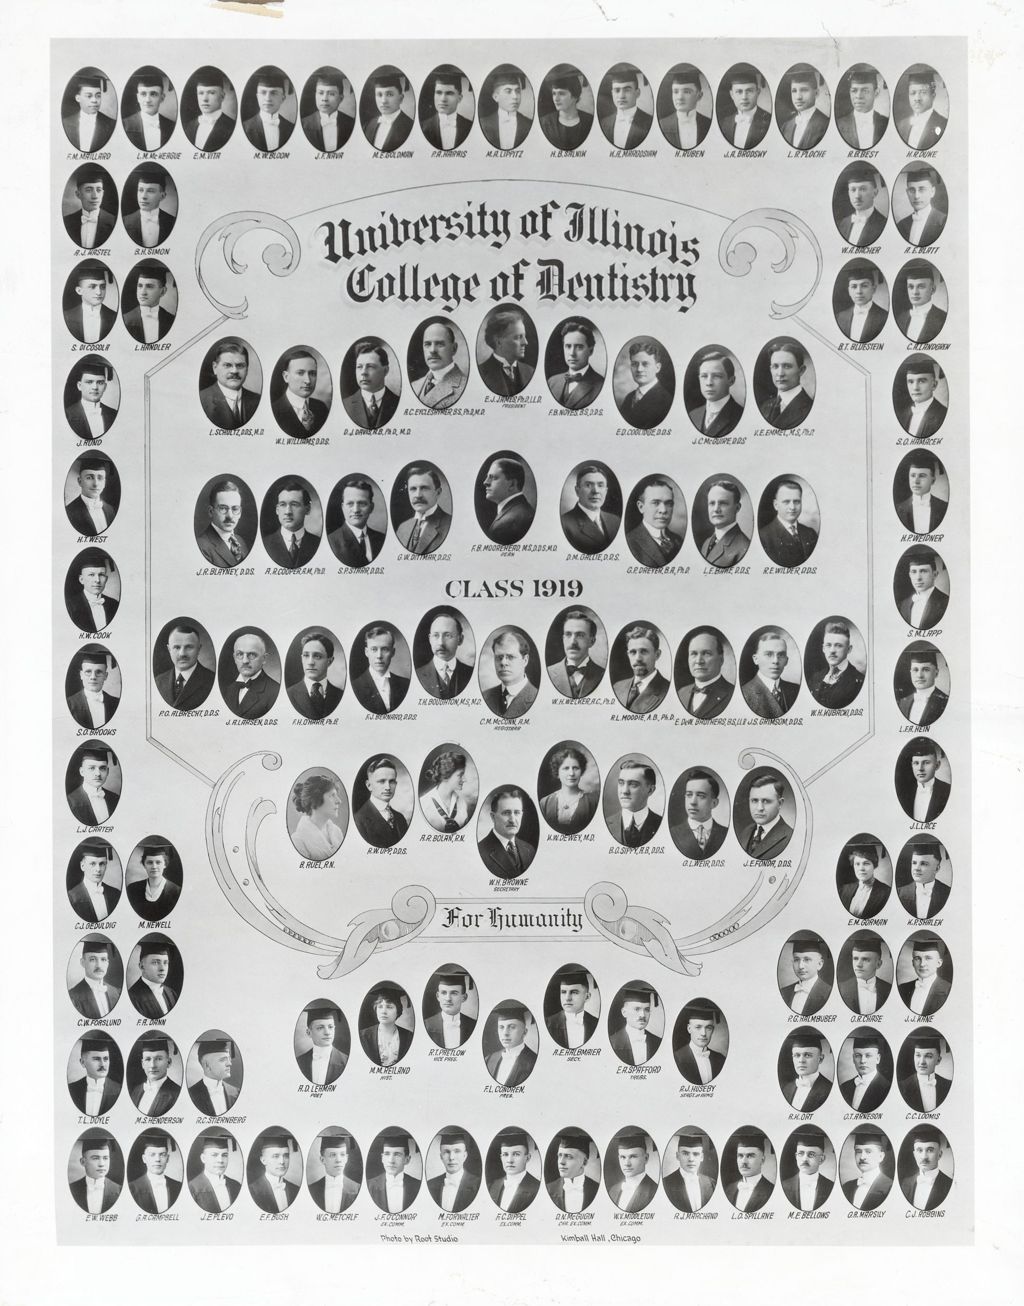 Miniature of 1919 graduating class, University of Illinois College of Dentistry